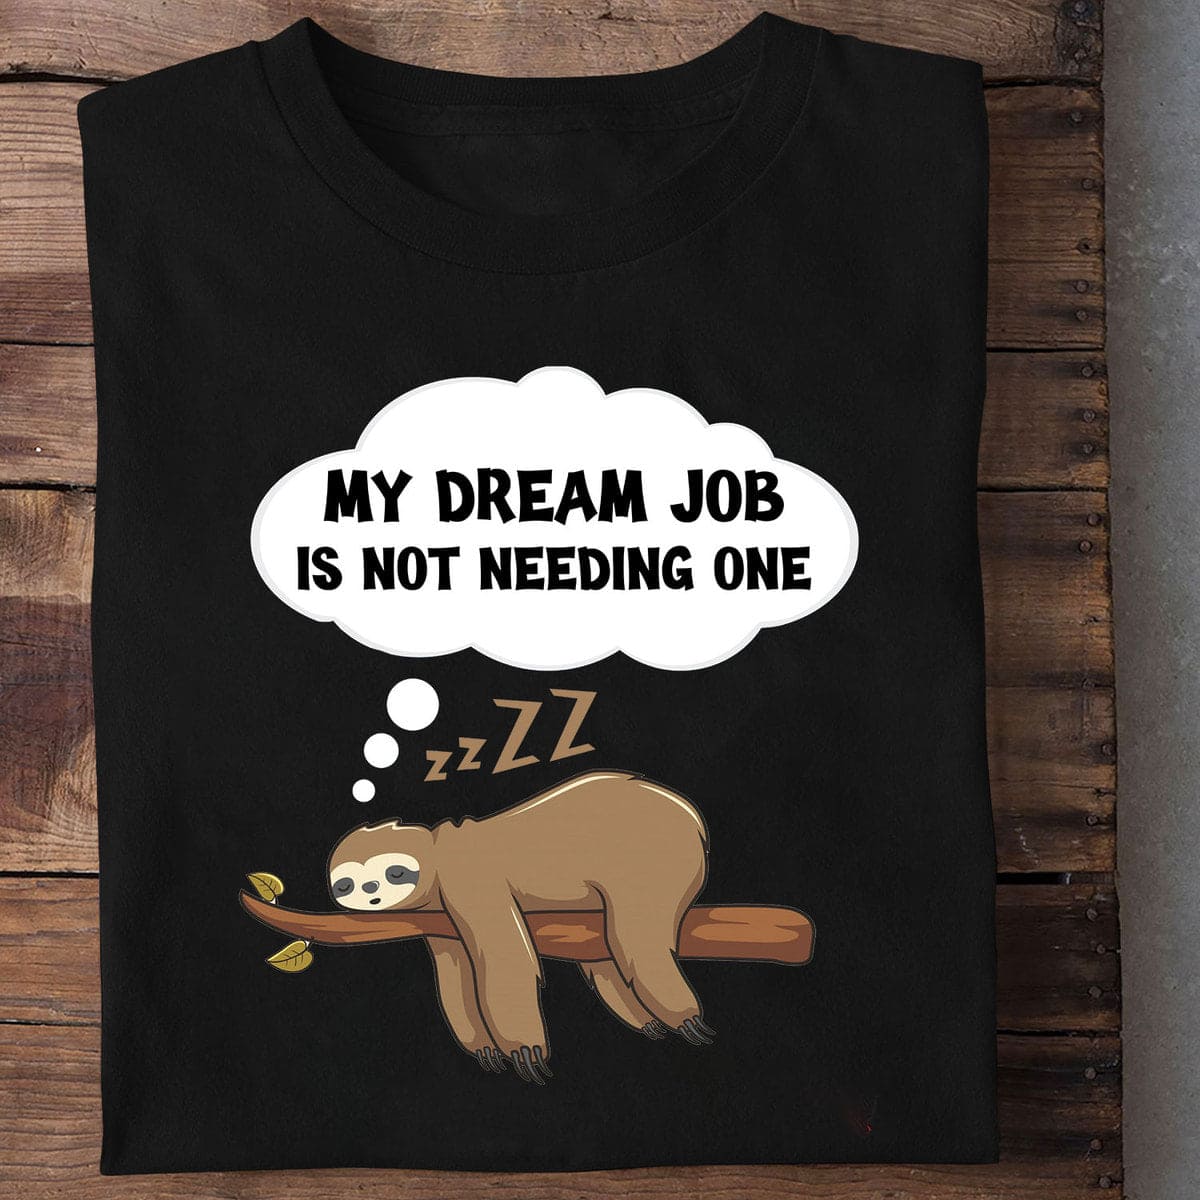 My dream job is not needing one - No need a job, Sleeping sloth